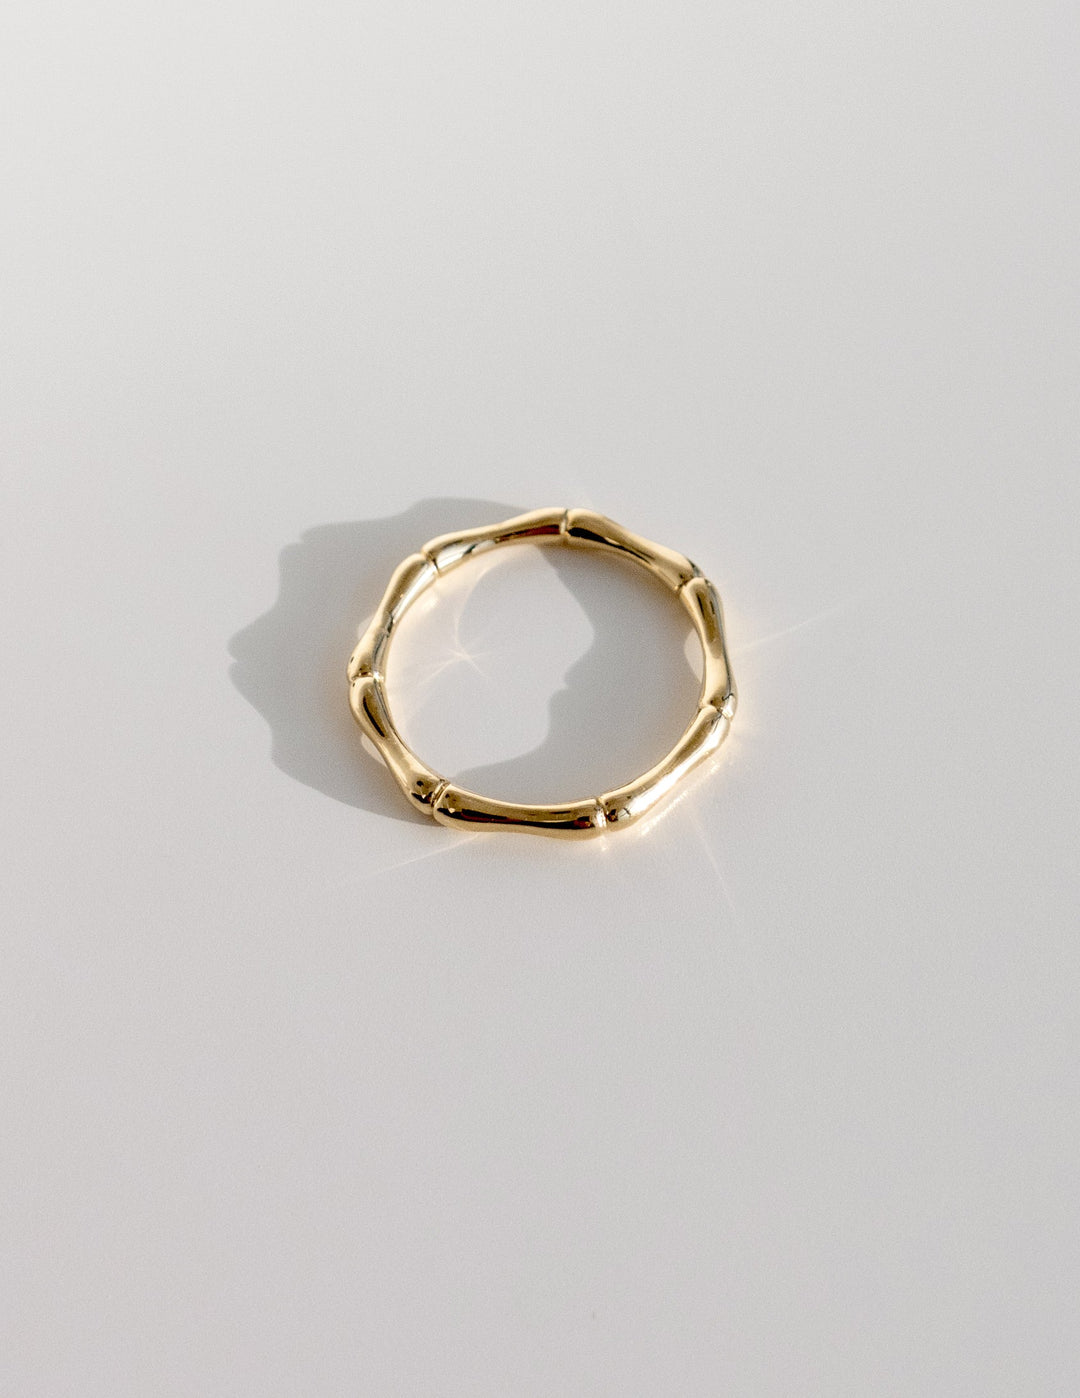 Sample - Bamboo Ring in 14k Gold (Size 6)